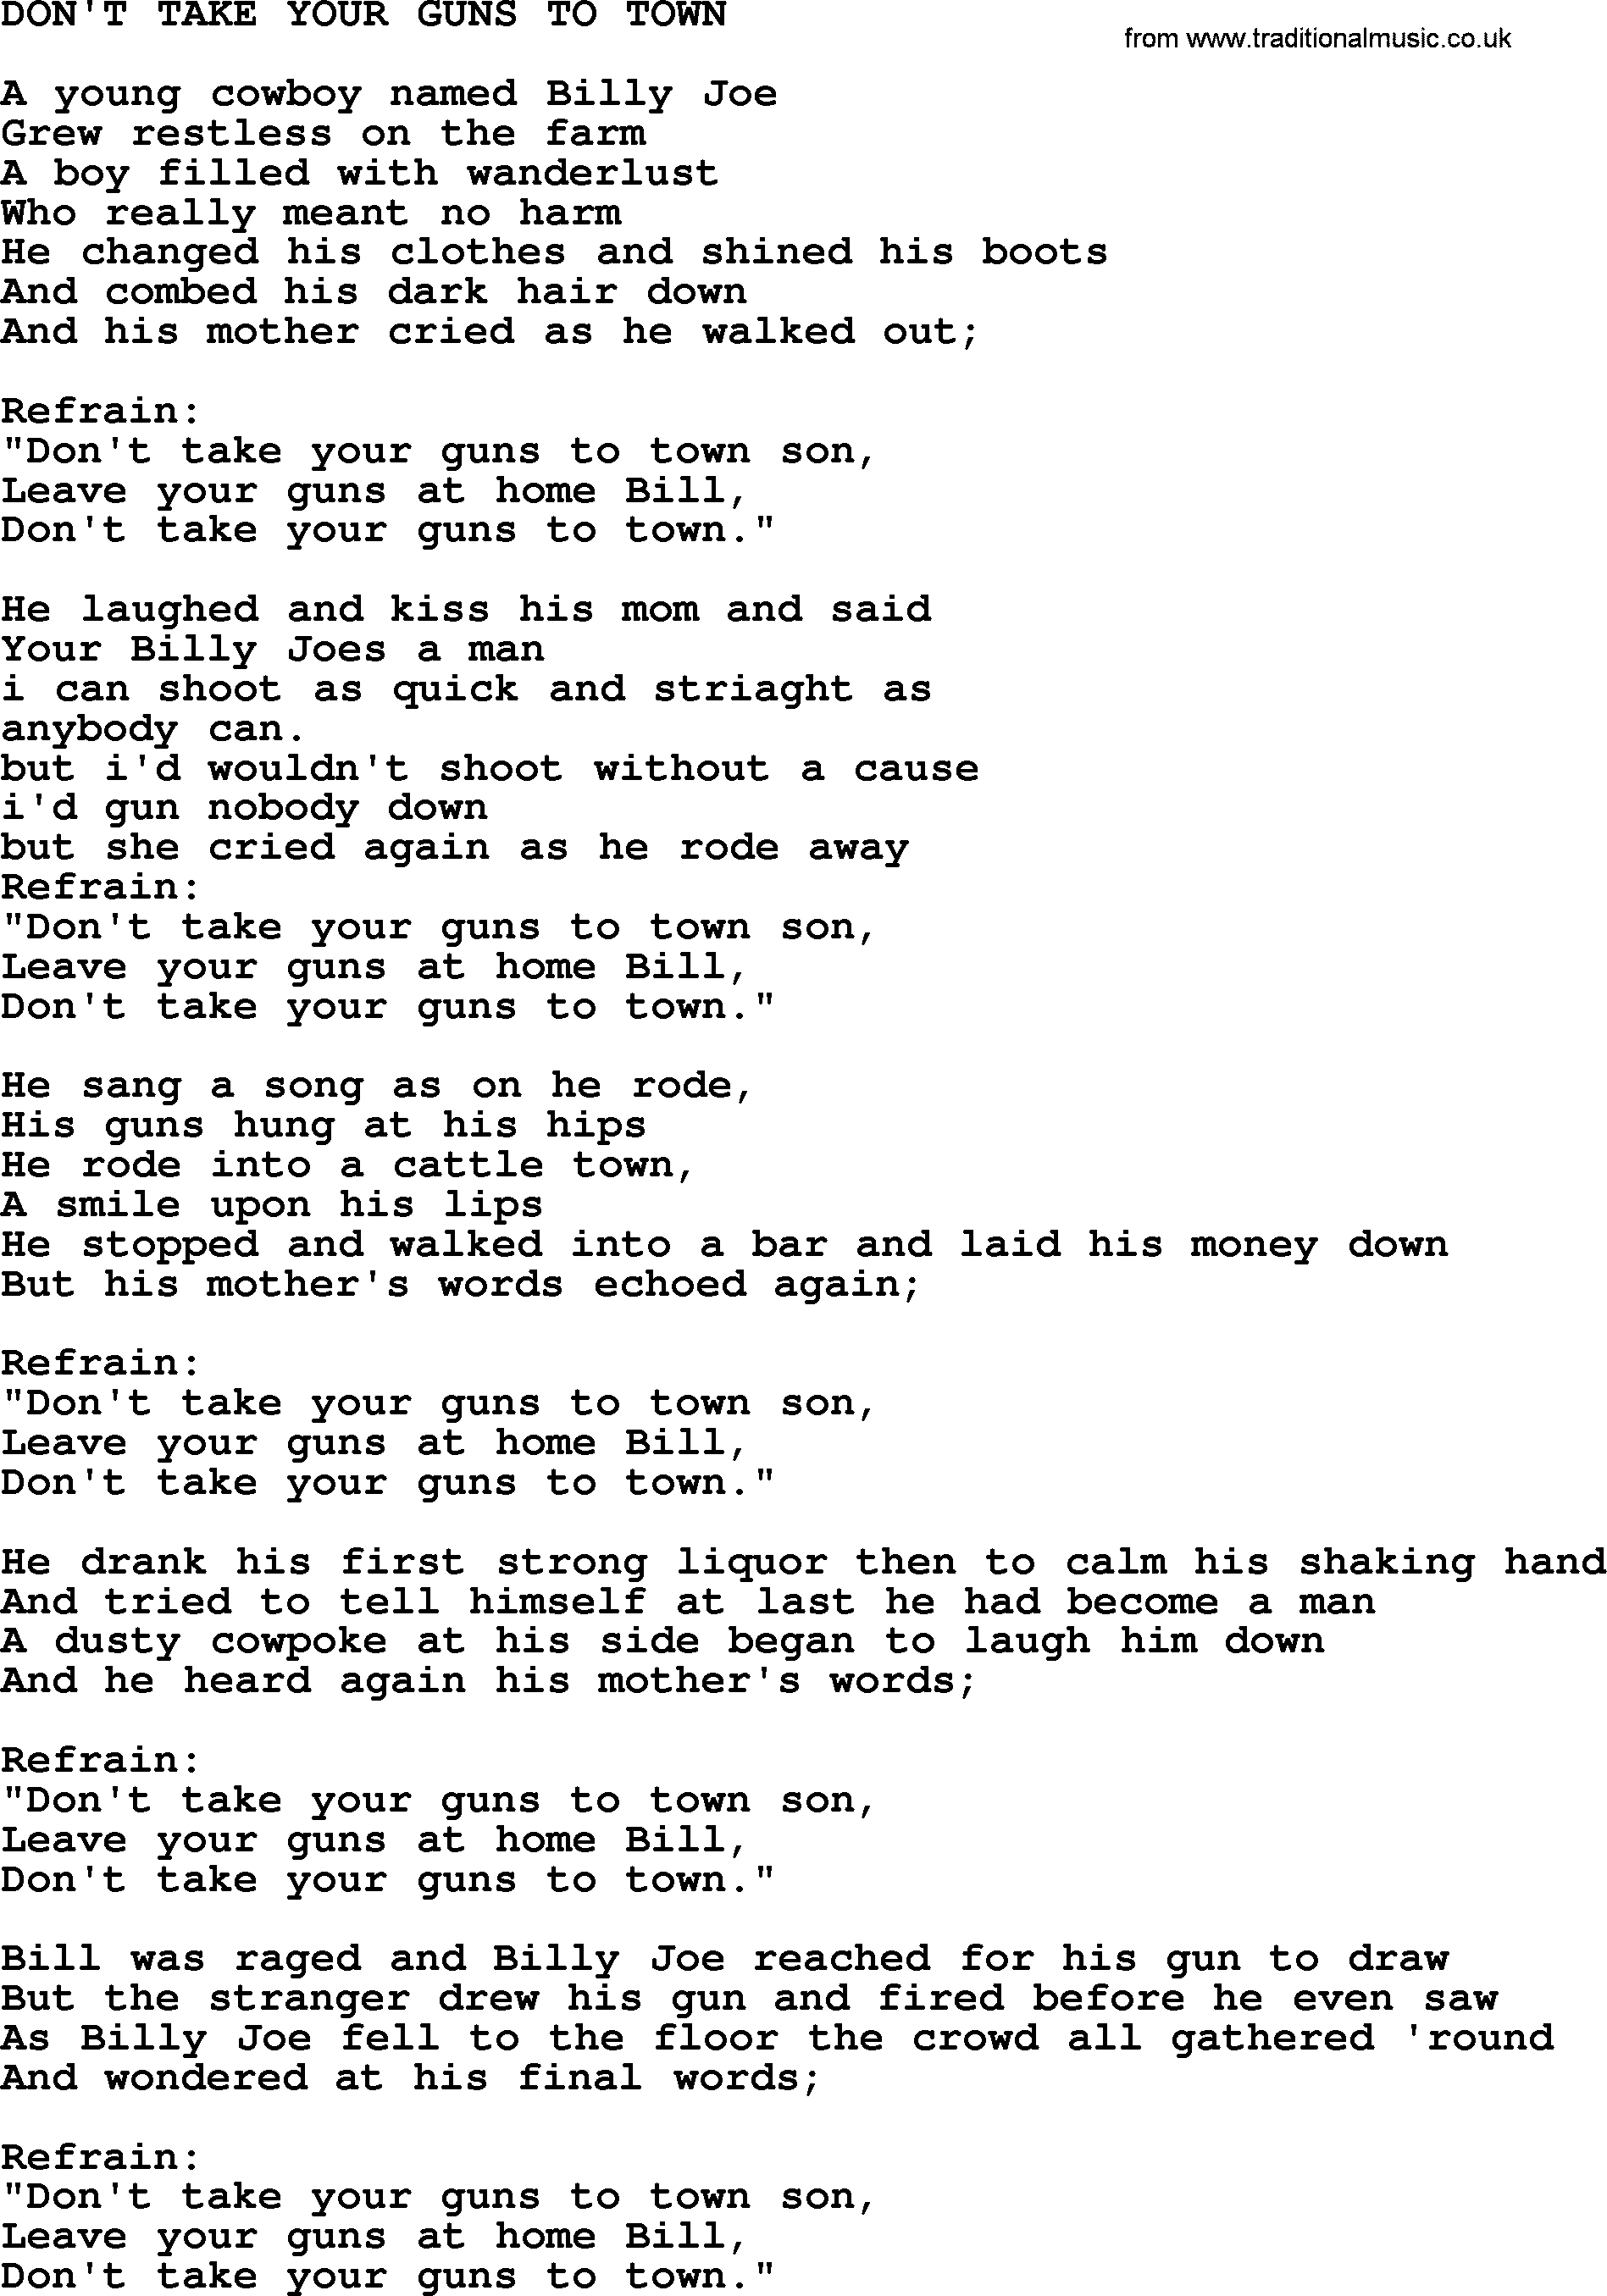 Johnny Cash song Don't Take Your Guns To Town.txt lyrics